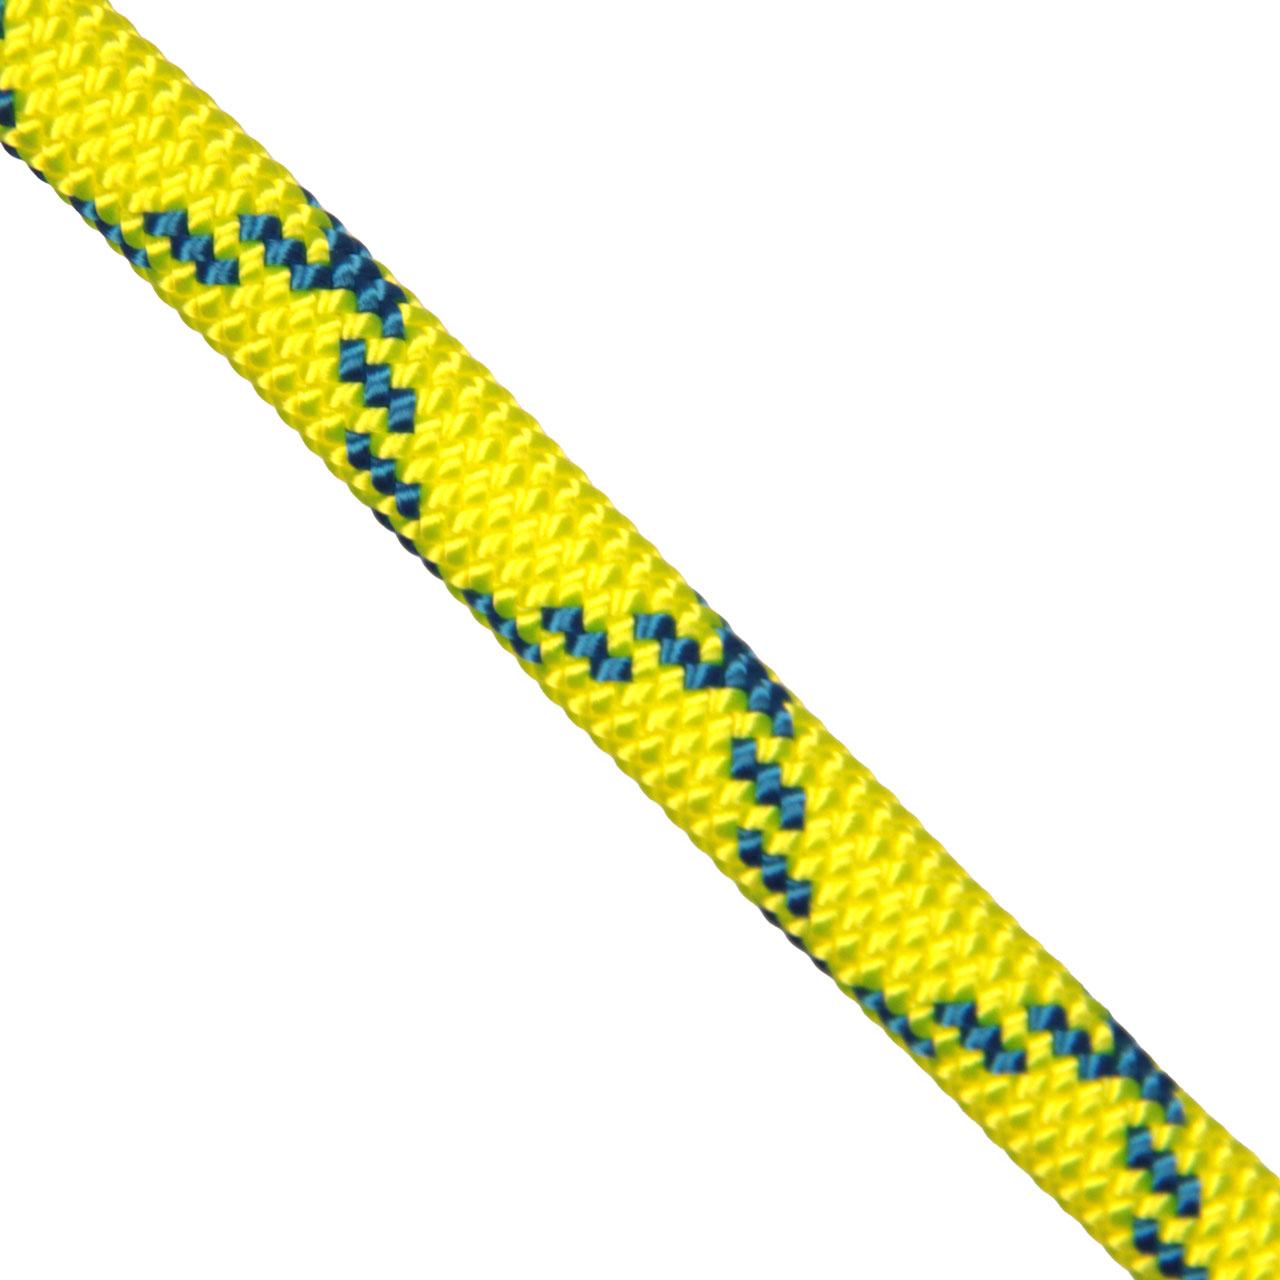 tango statx rope from drayer